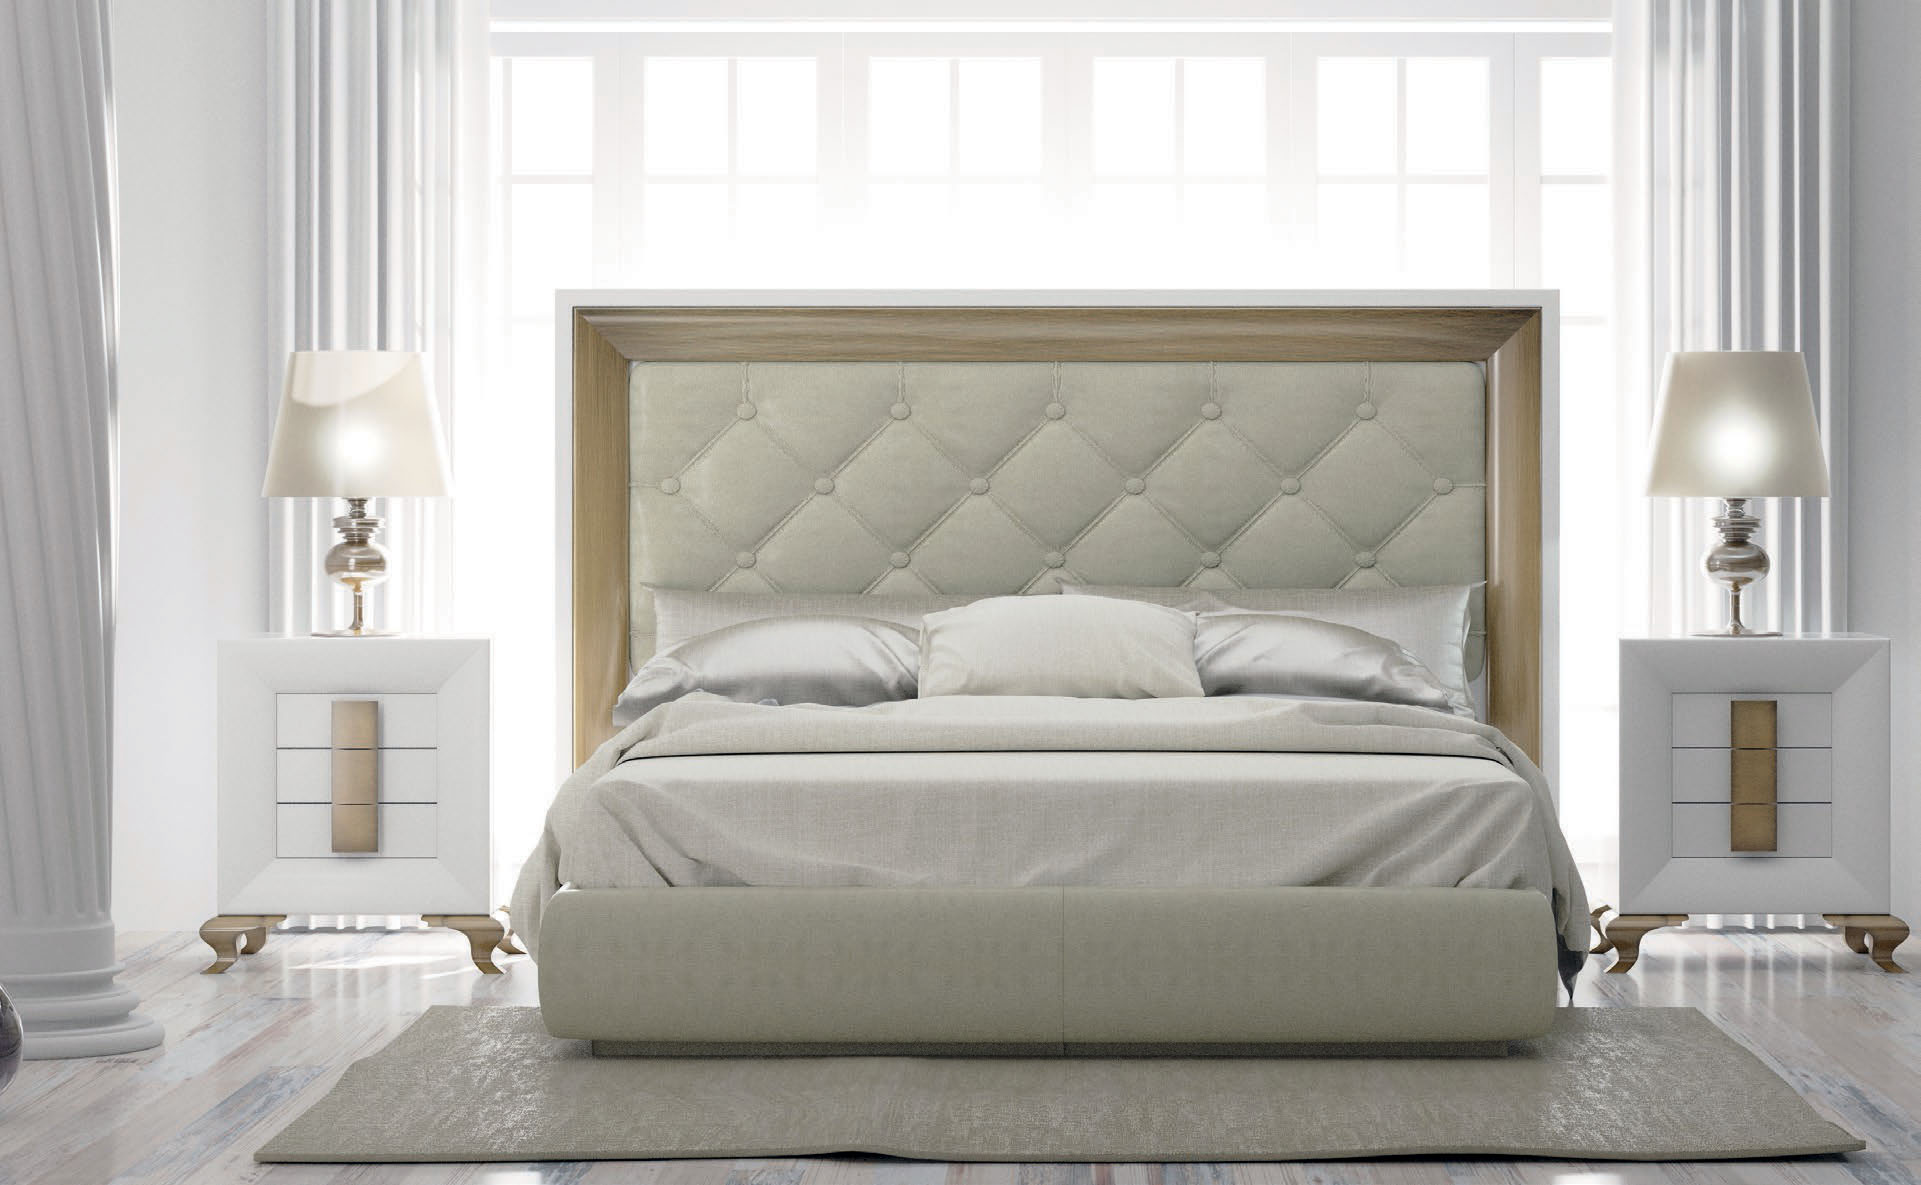 Brands Franco Furniture Bedrooms vol1, Spain DOR 139